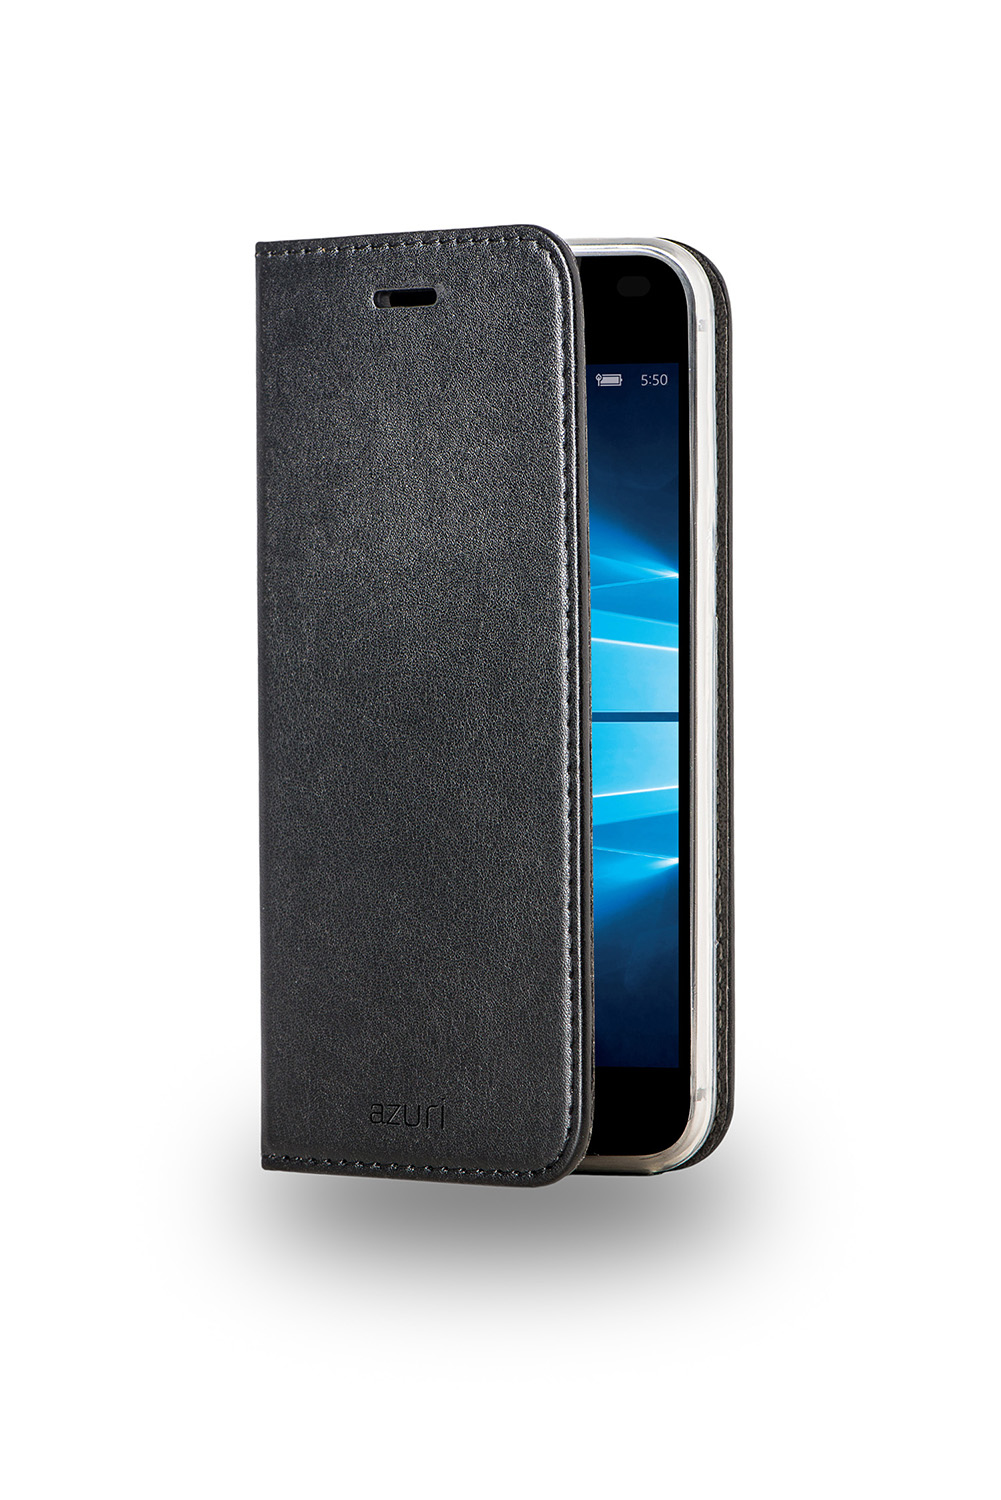 Image of Azuri wallettasjemetmagnetischesluiting-zwart-Lumia550